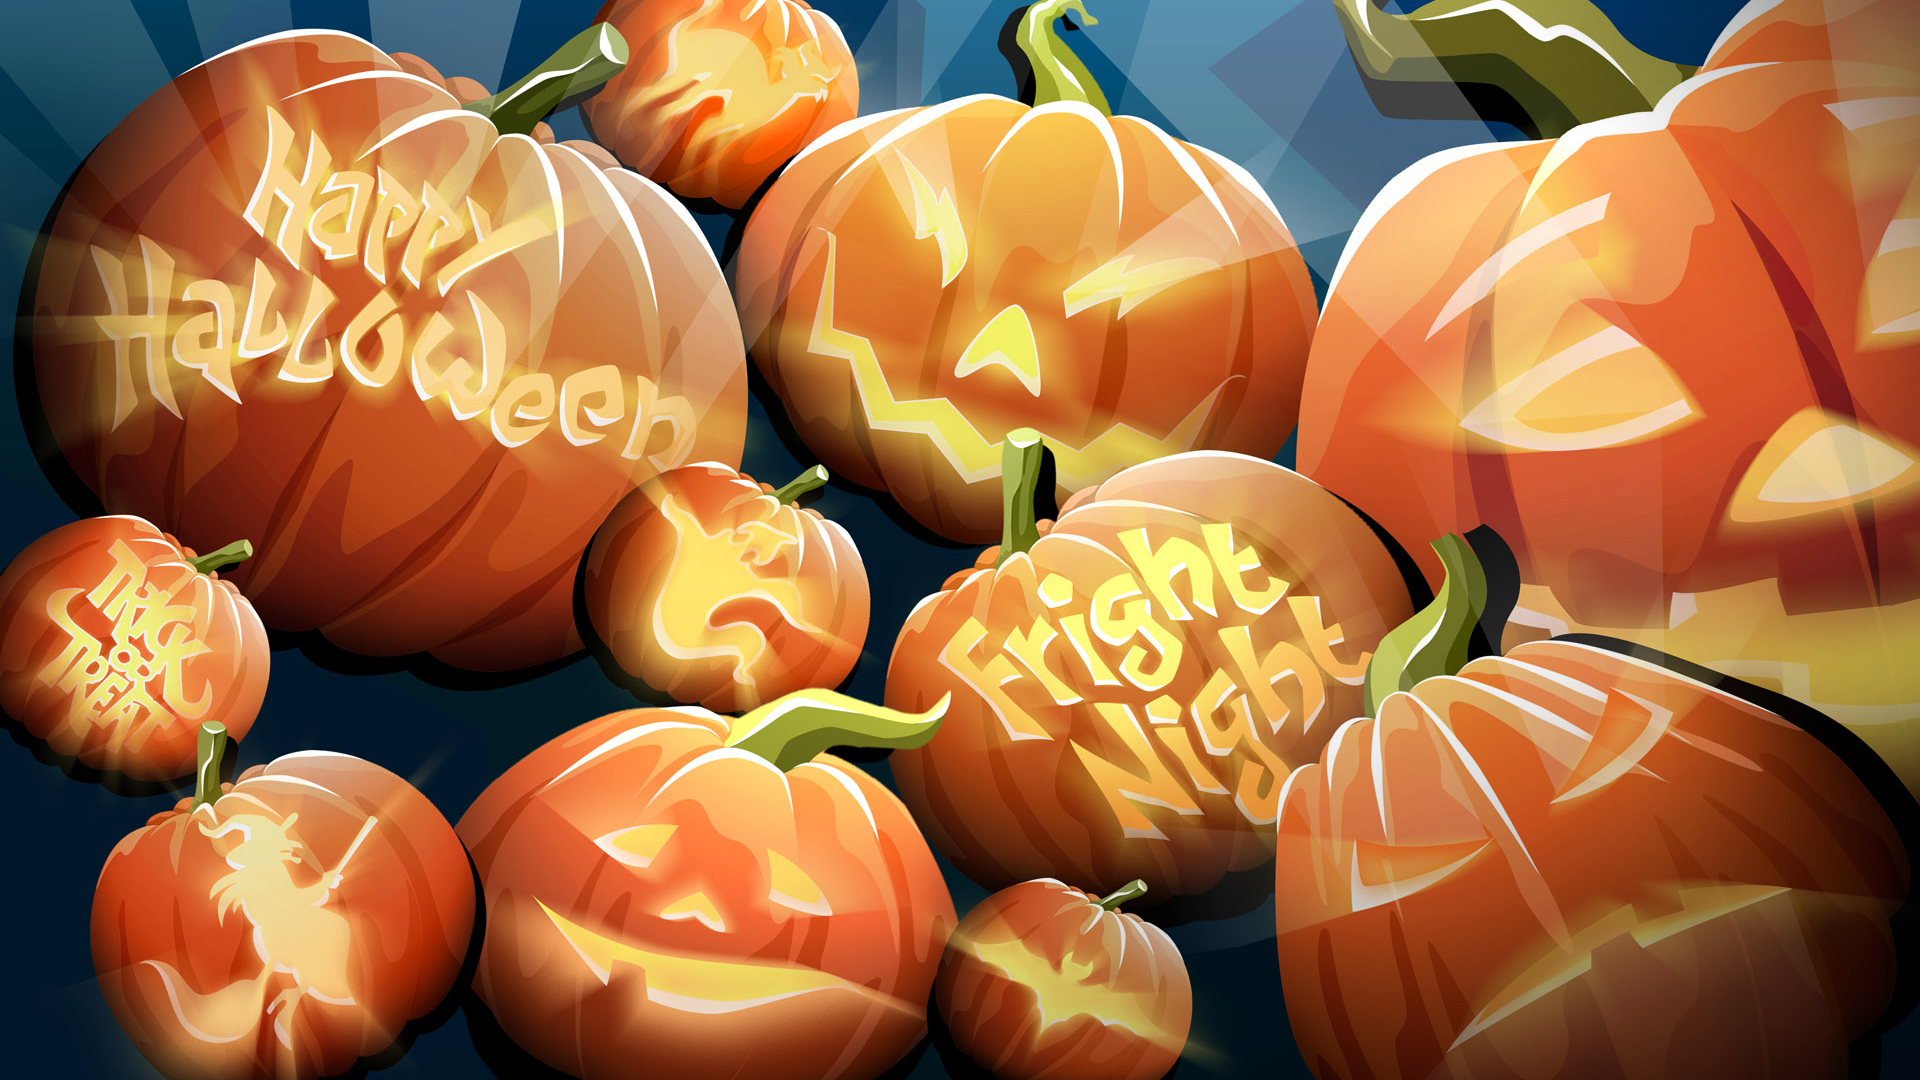 Pumpkin Carving Halloween Wallpaper HD Description